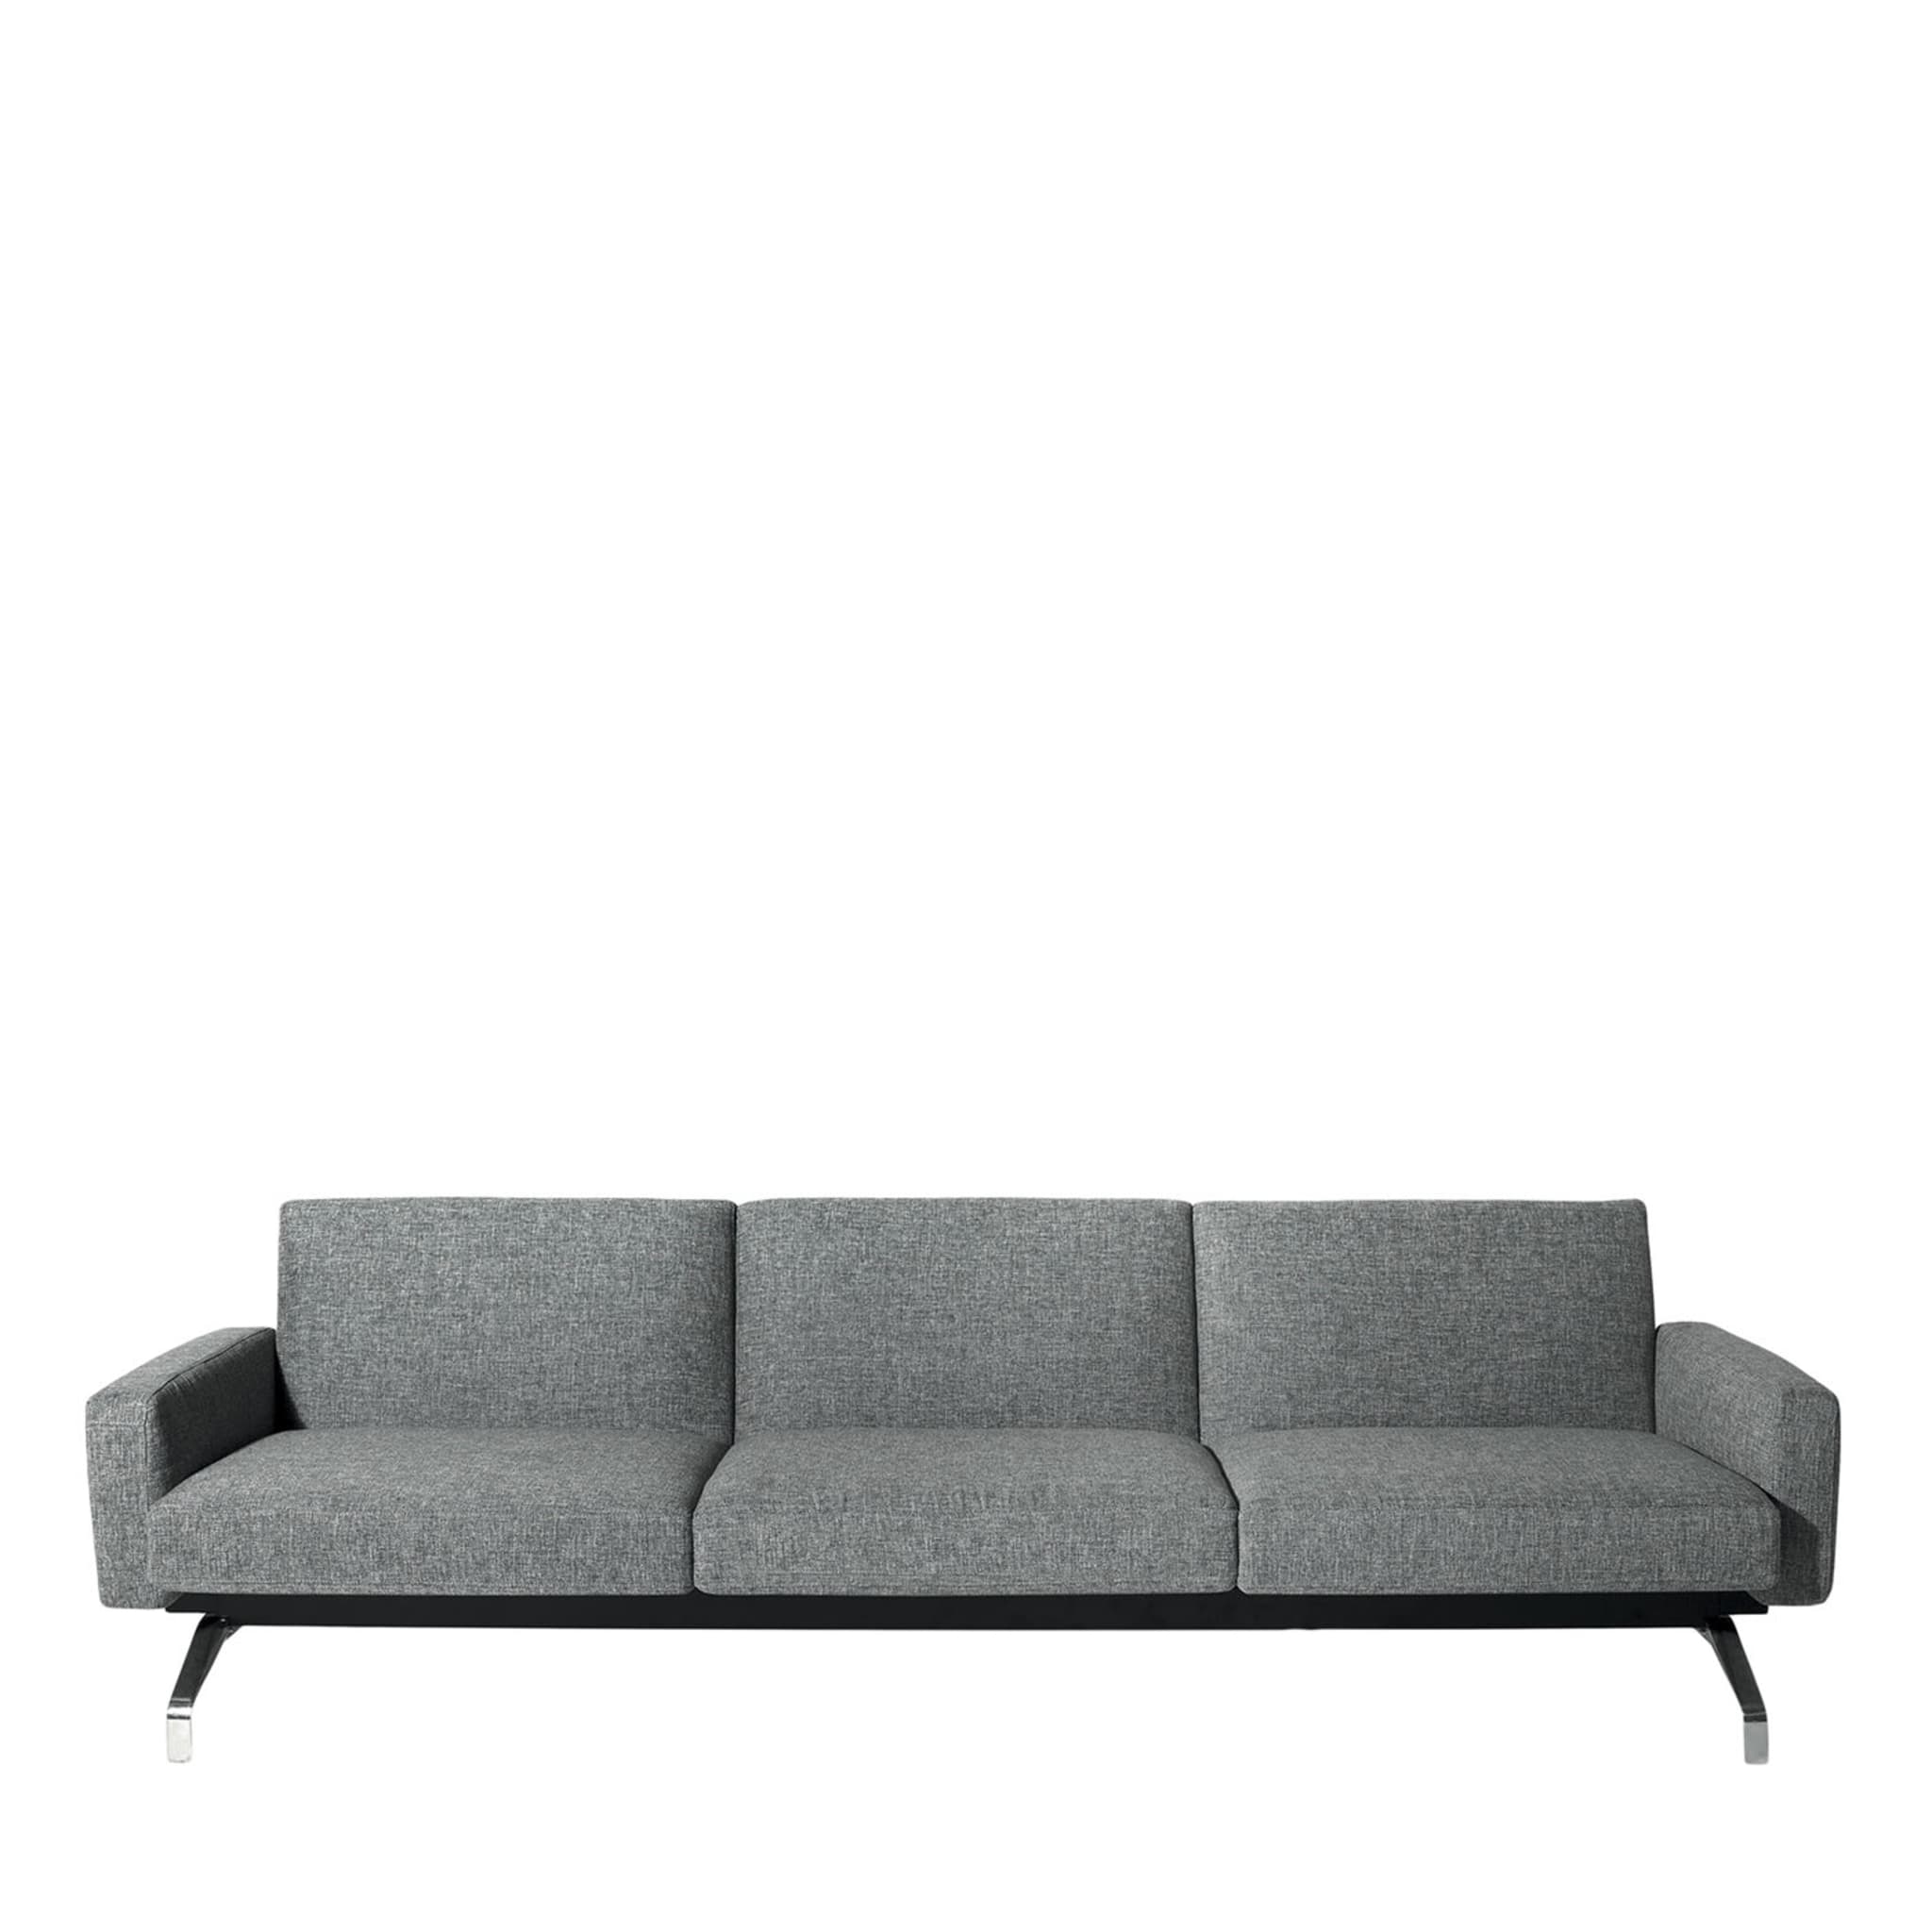 Pons Gray 3-Seater Sofa by Rodolfo Dordoni - Main view